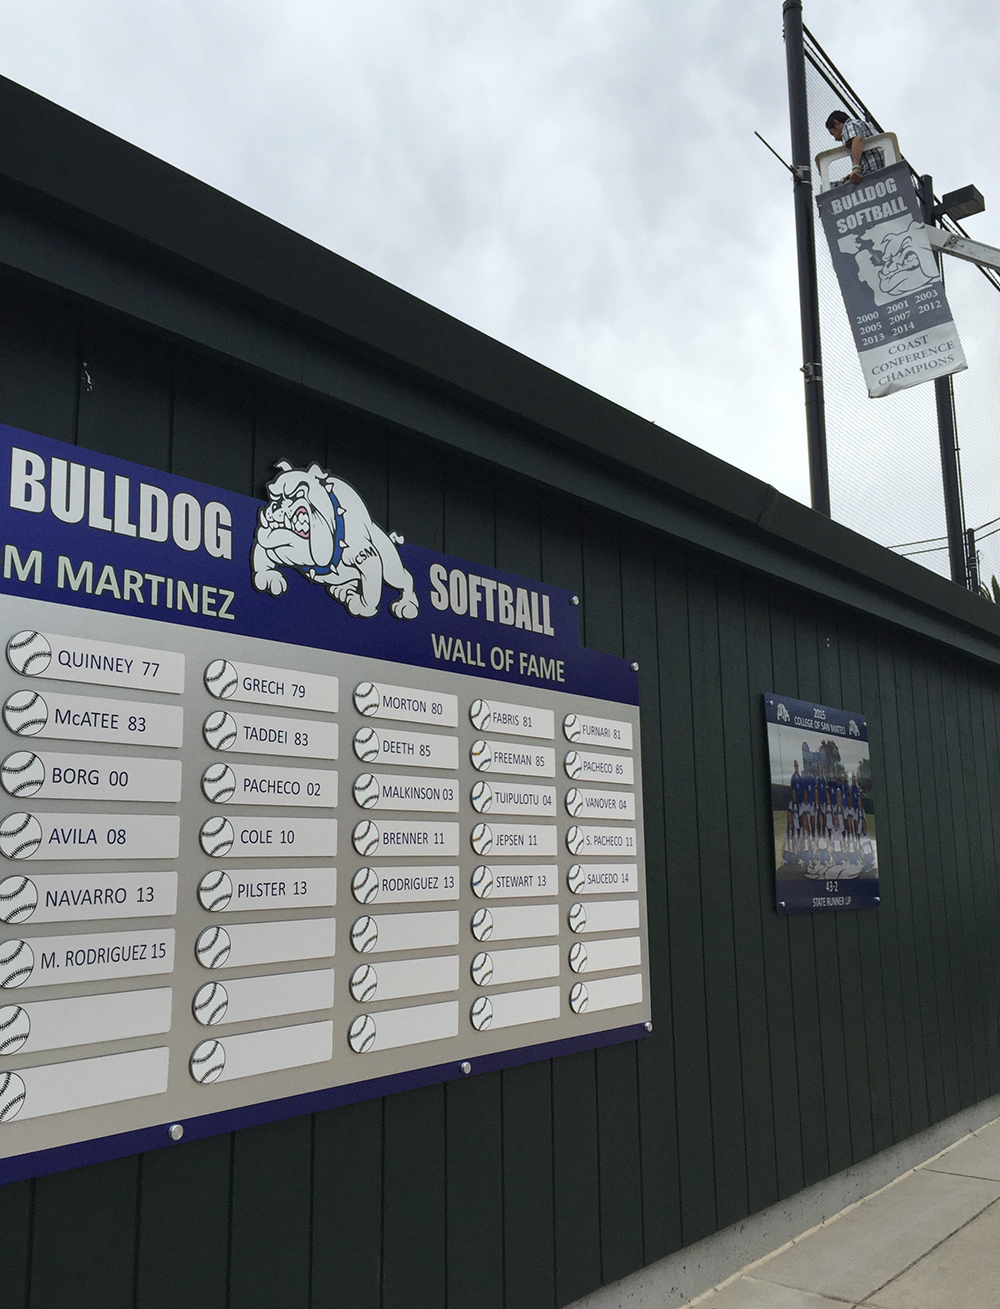 CSM Bulldogs softball outdoor signage